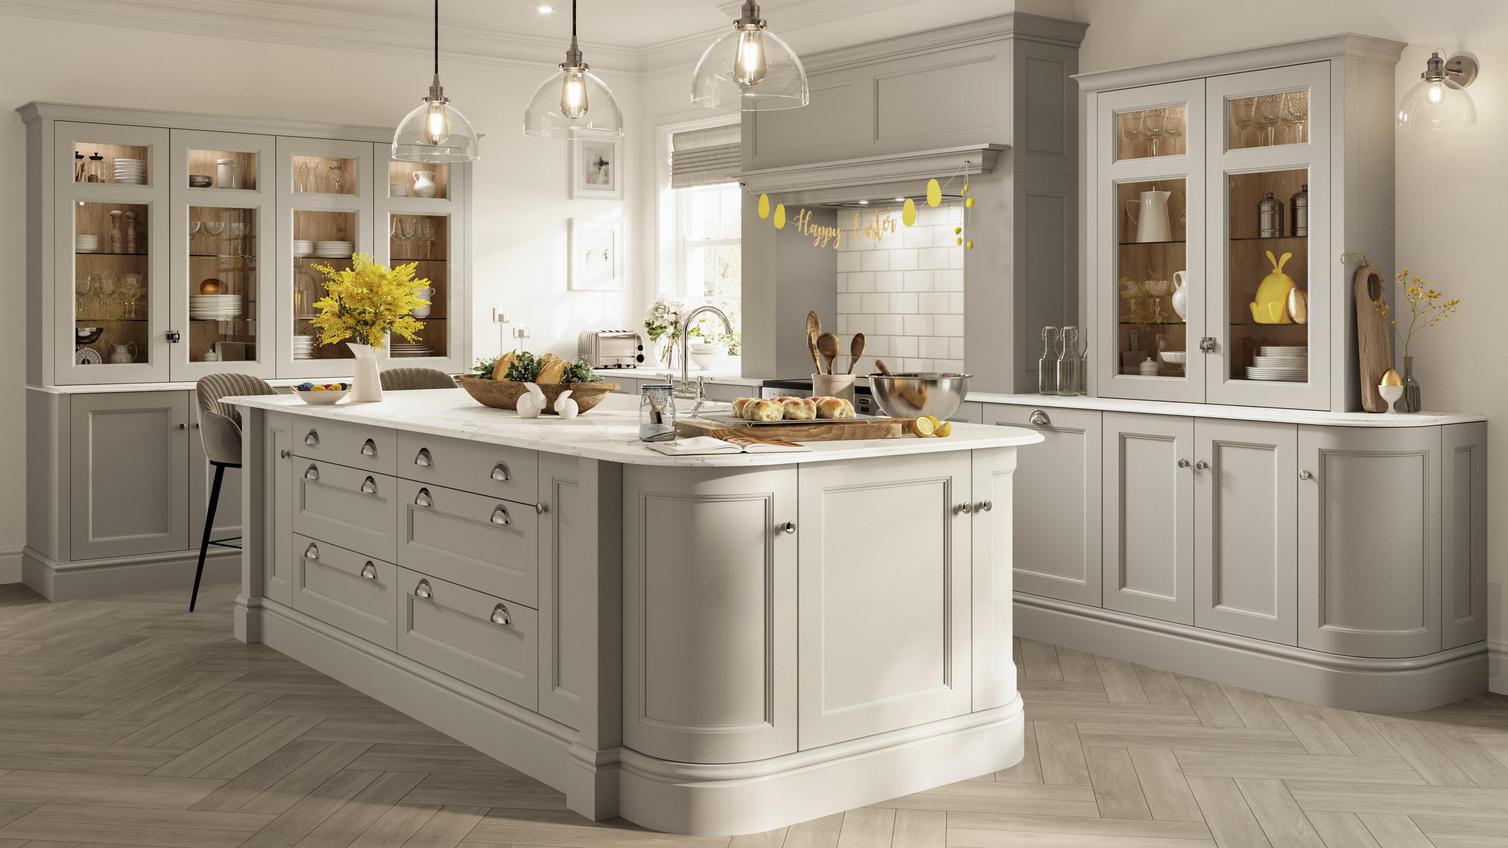 Elmbridge dove-grey kitchen design with chrome cup handles, light oak chevron floors, and Easter decorations.